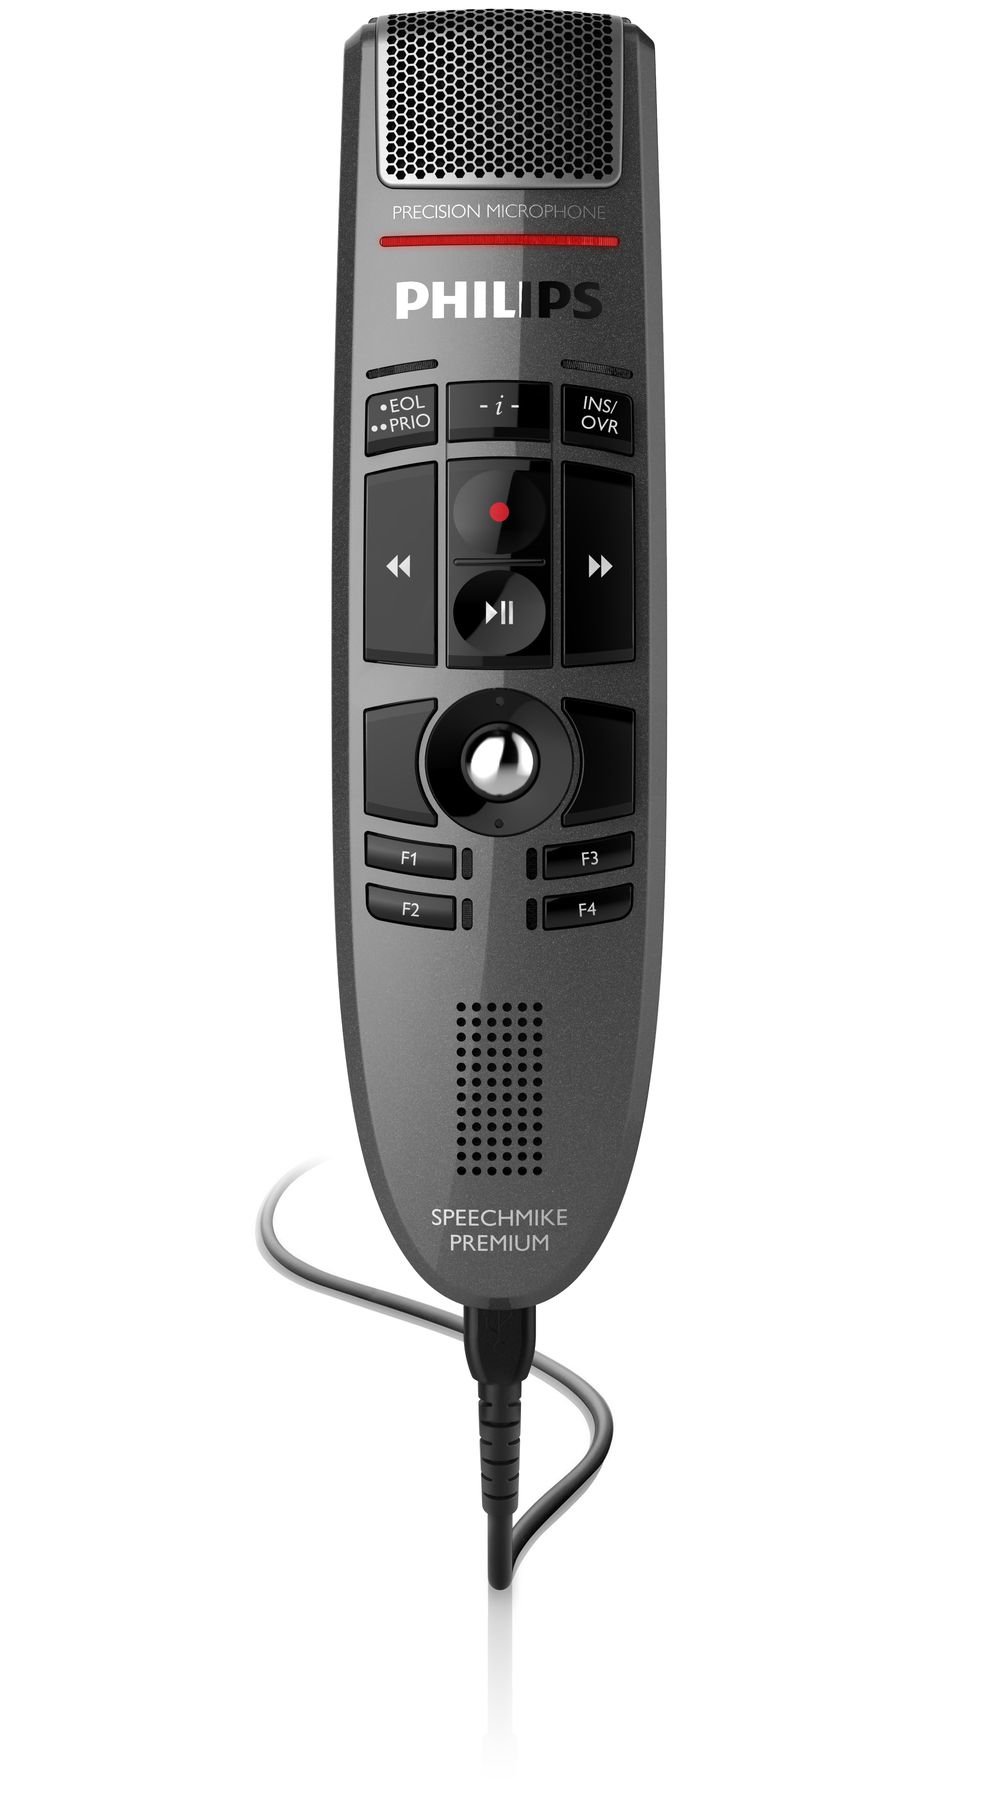 Philips LFH-3500 SpeechMike Premium USB dictation micro...